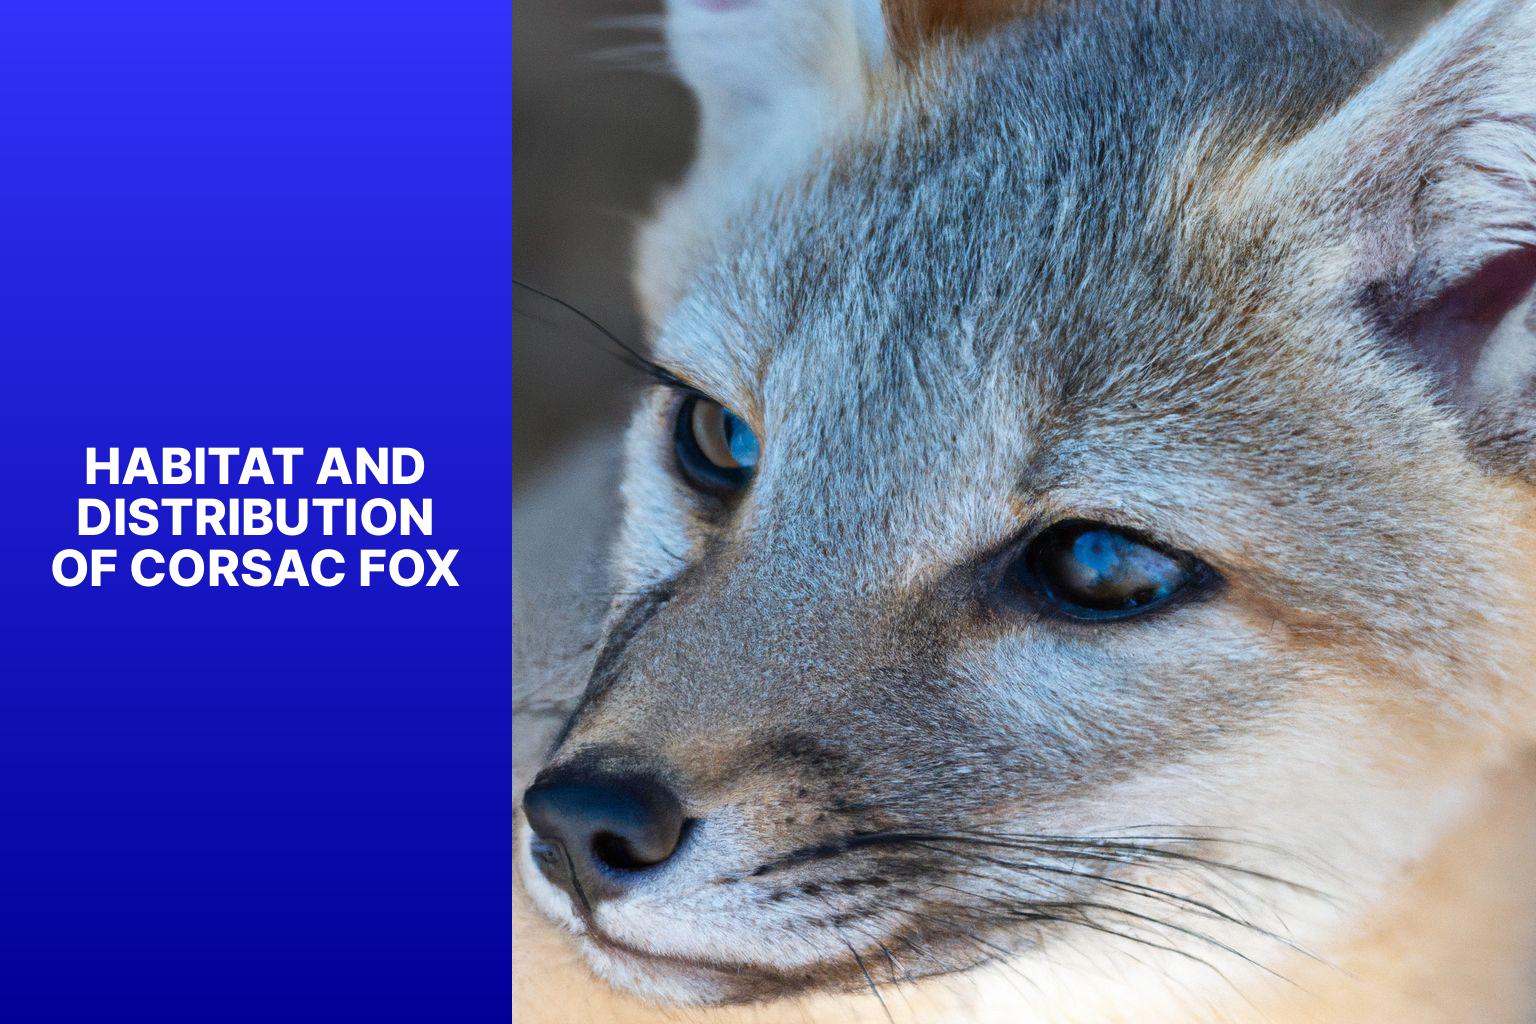 Habitat and Distribution of Corsac Fox - Corsac Fox Unique Features 